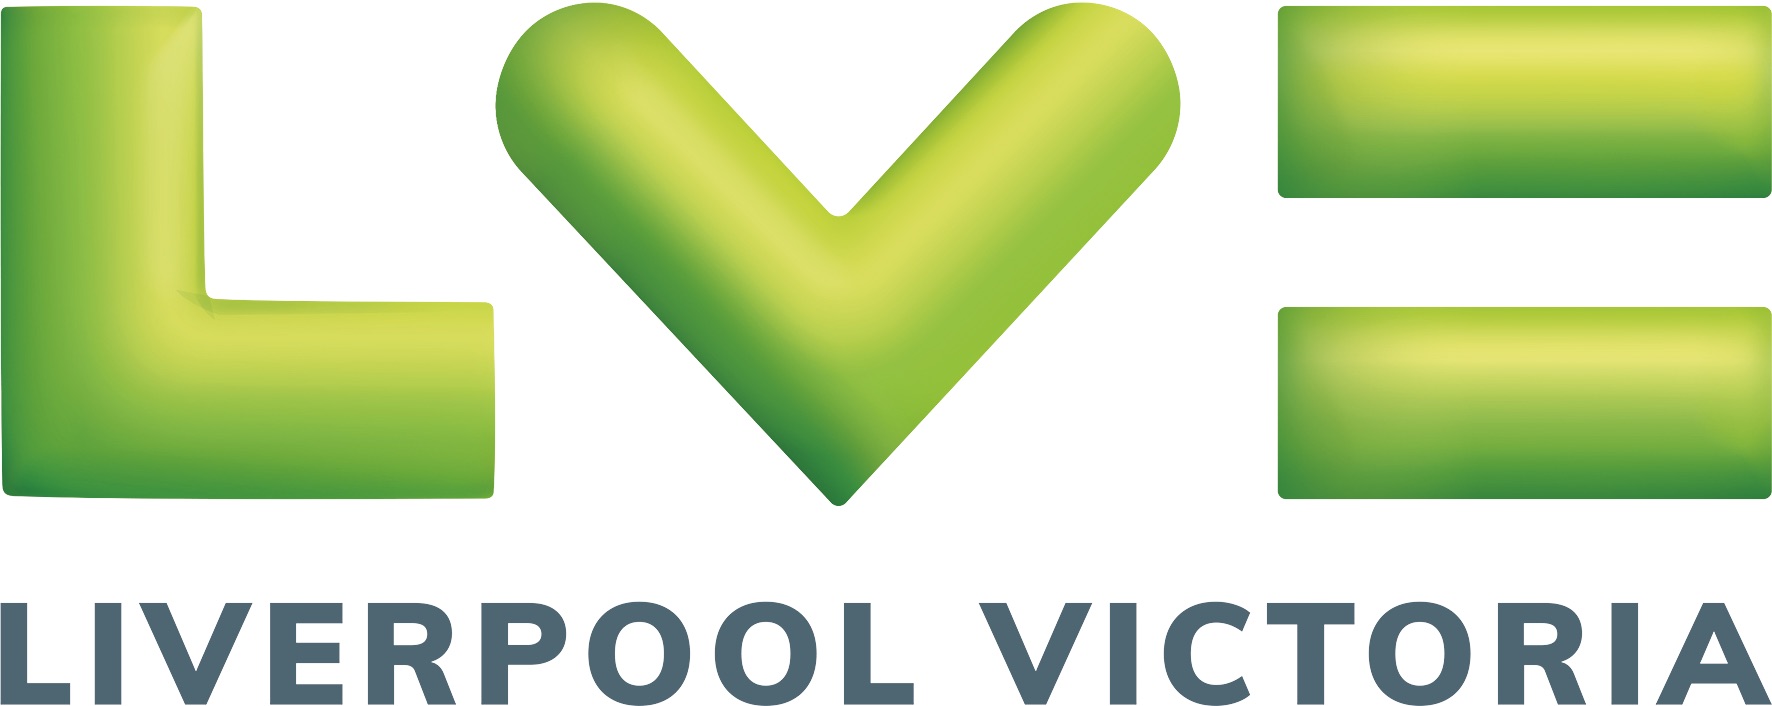 Liverpool victoria - full logo